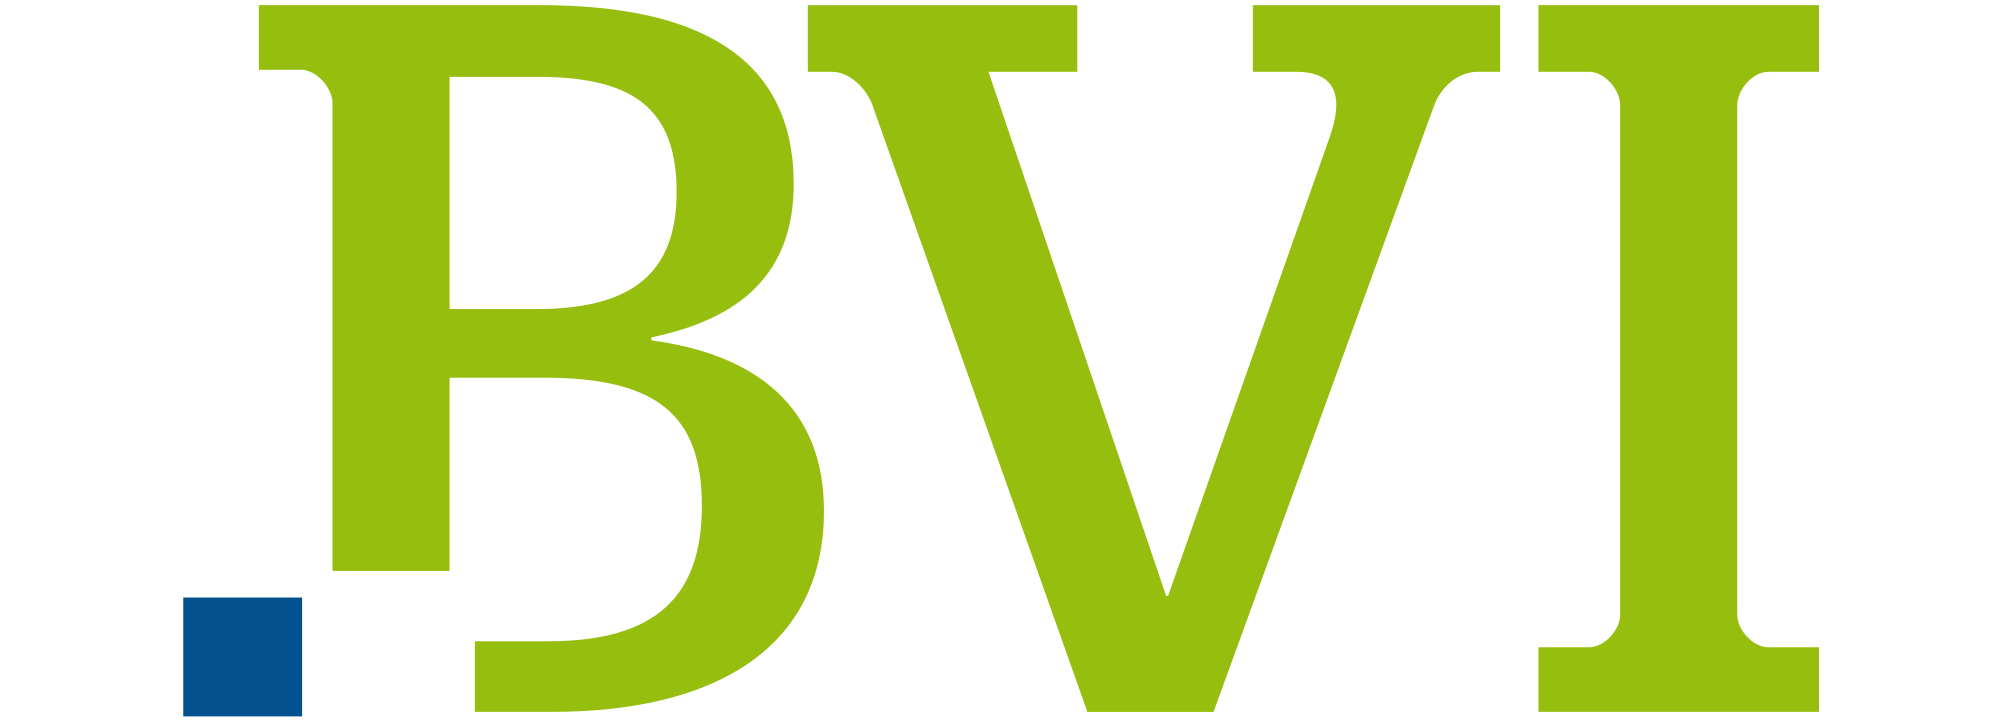 BVI Logo - Logo BVI Bundesverband Investment und Asset Management e.V.svg